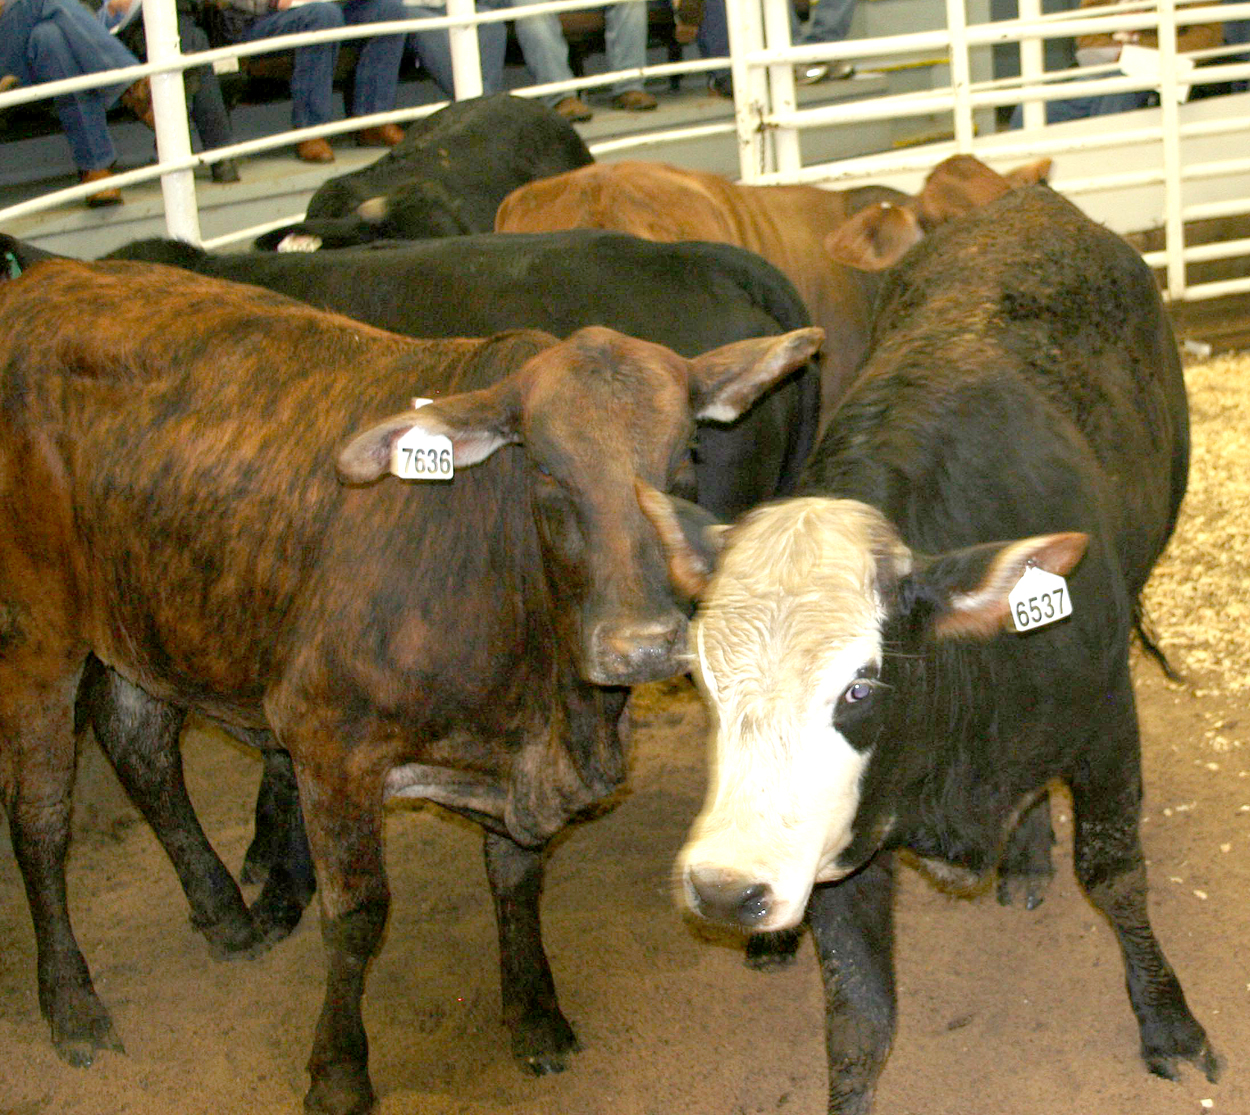 February Northeast Texas Beef Improvement Organization (NETBIO) Sale A Success Despite Rain